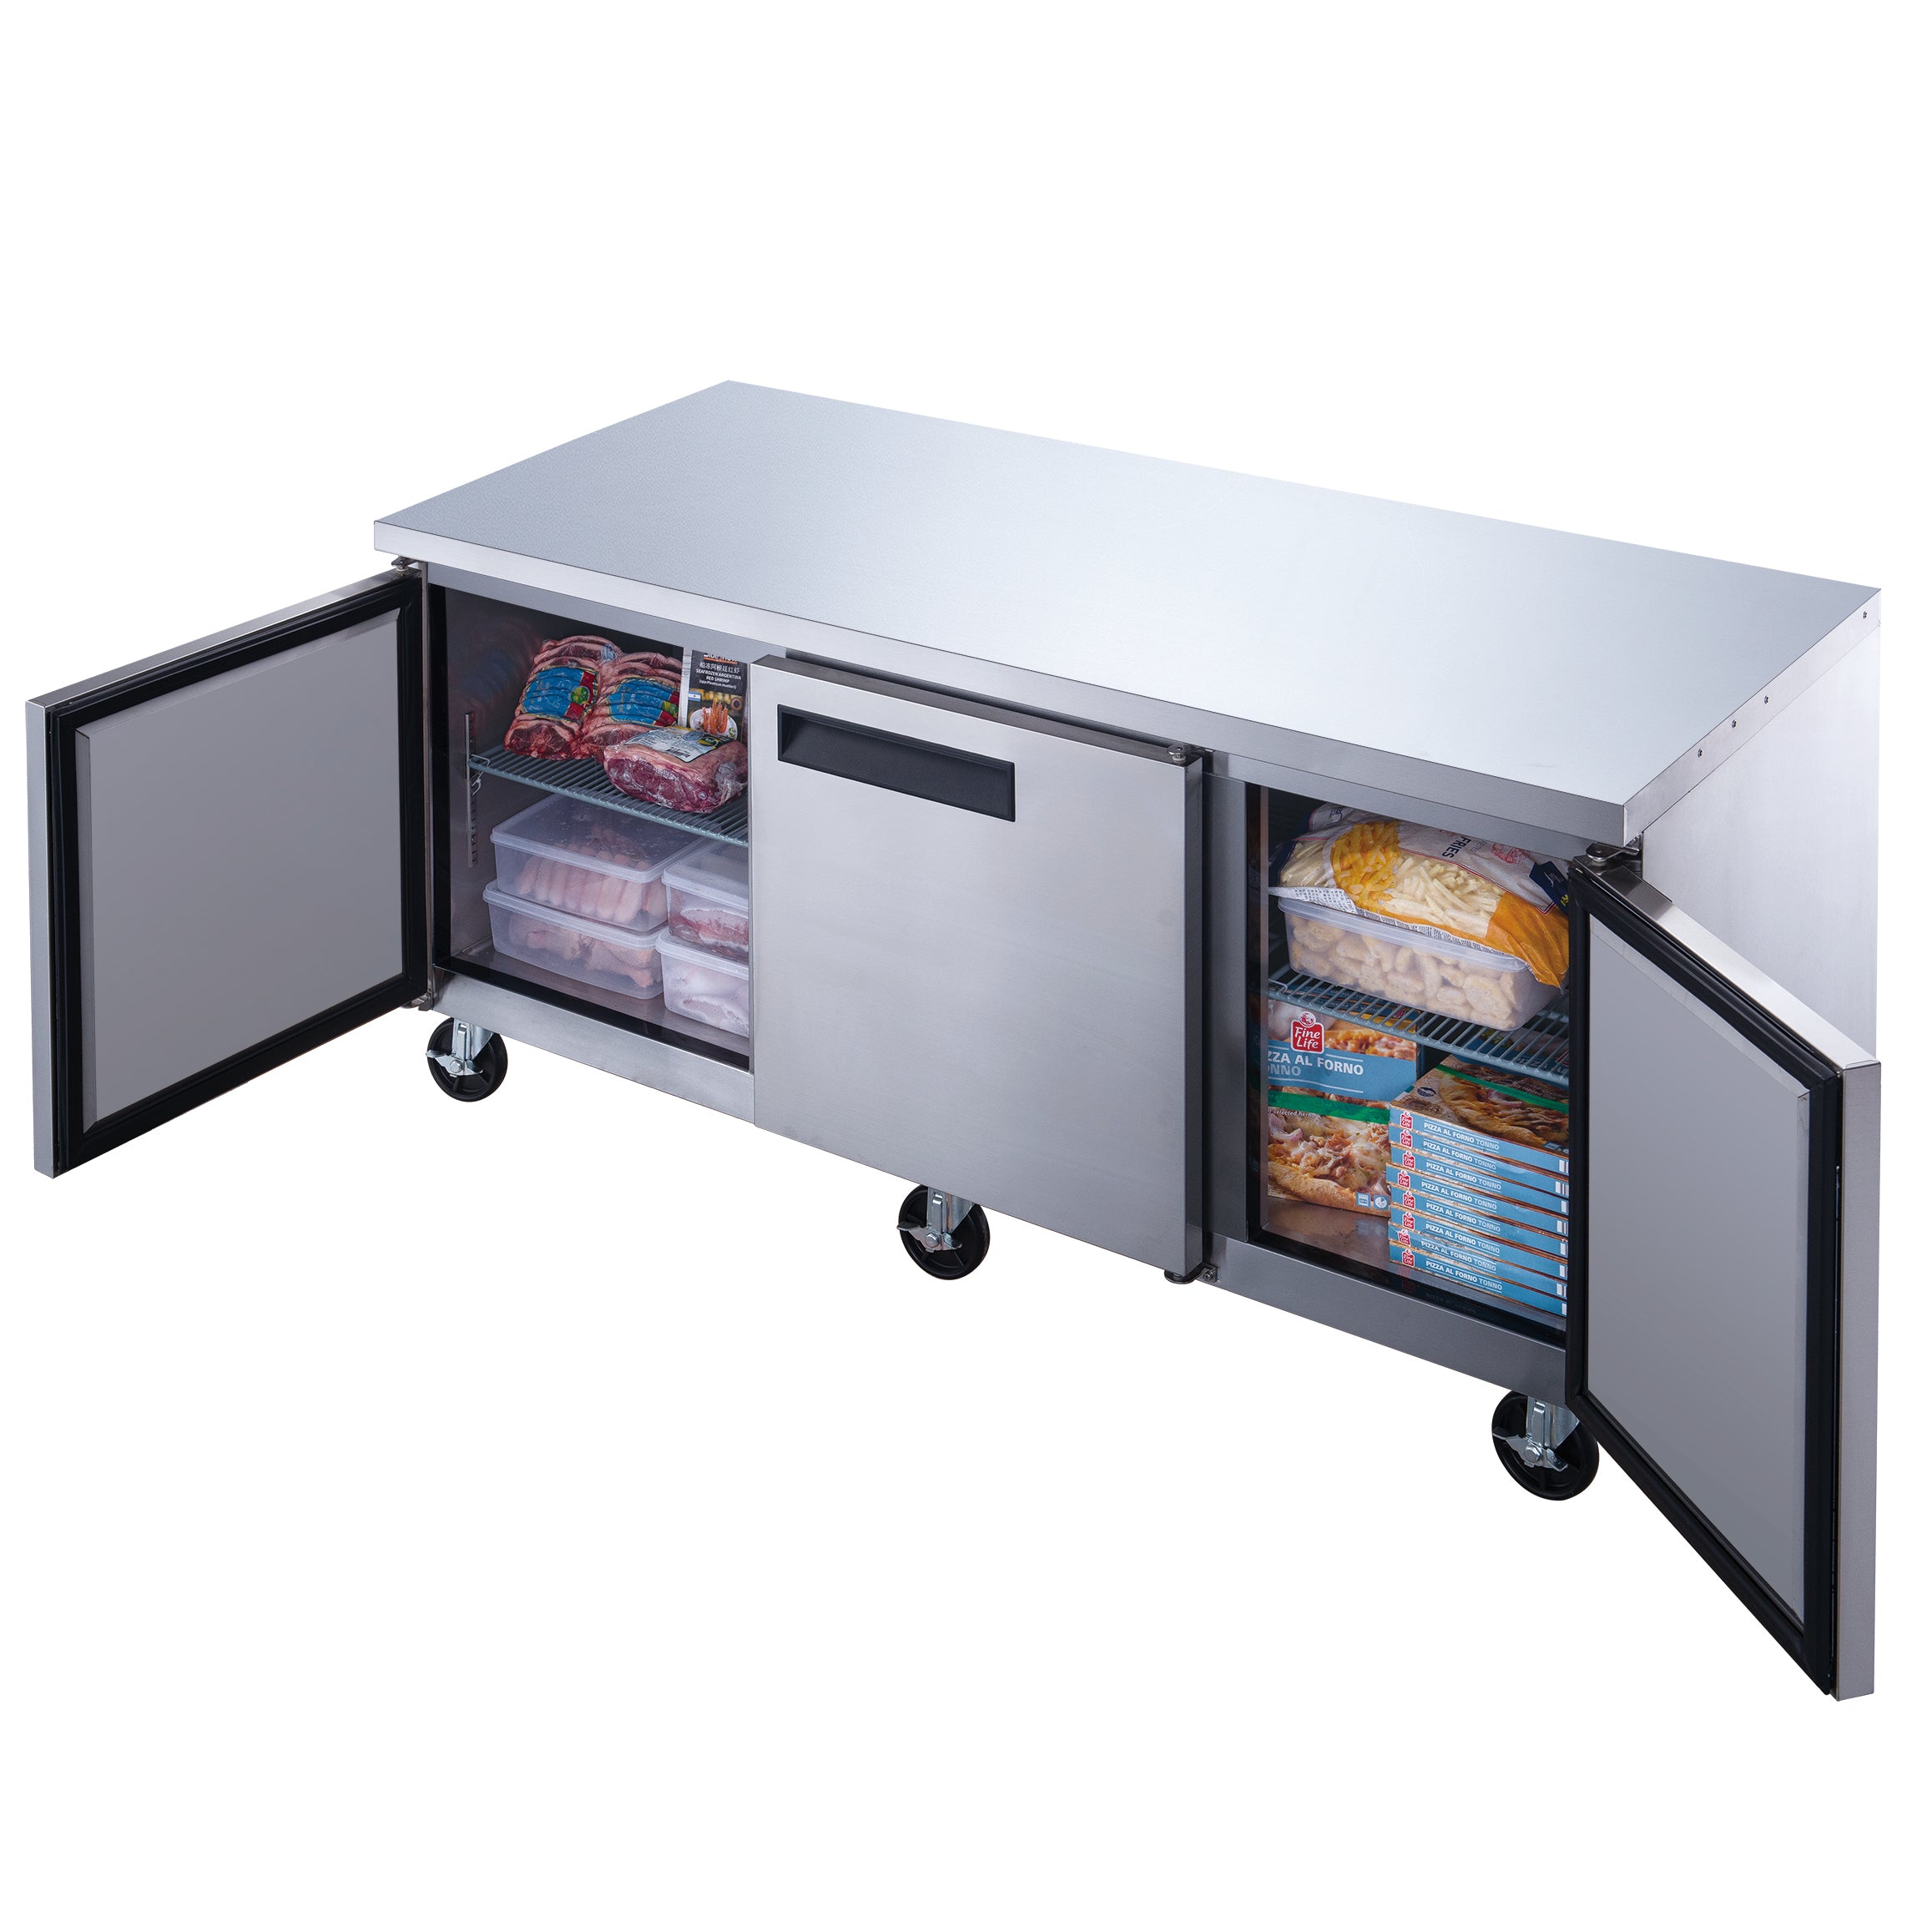 Chef AAA - TUC72F, Commercial 72" Undercounter Worktop Freezer 18.9cu.ft. NSF